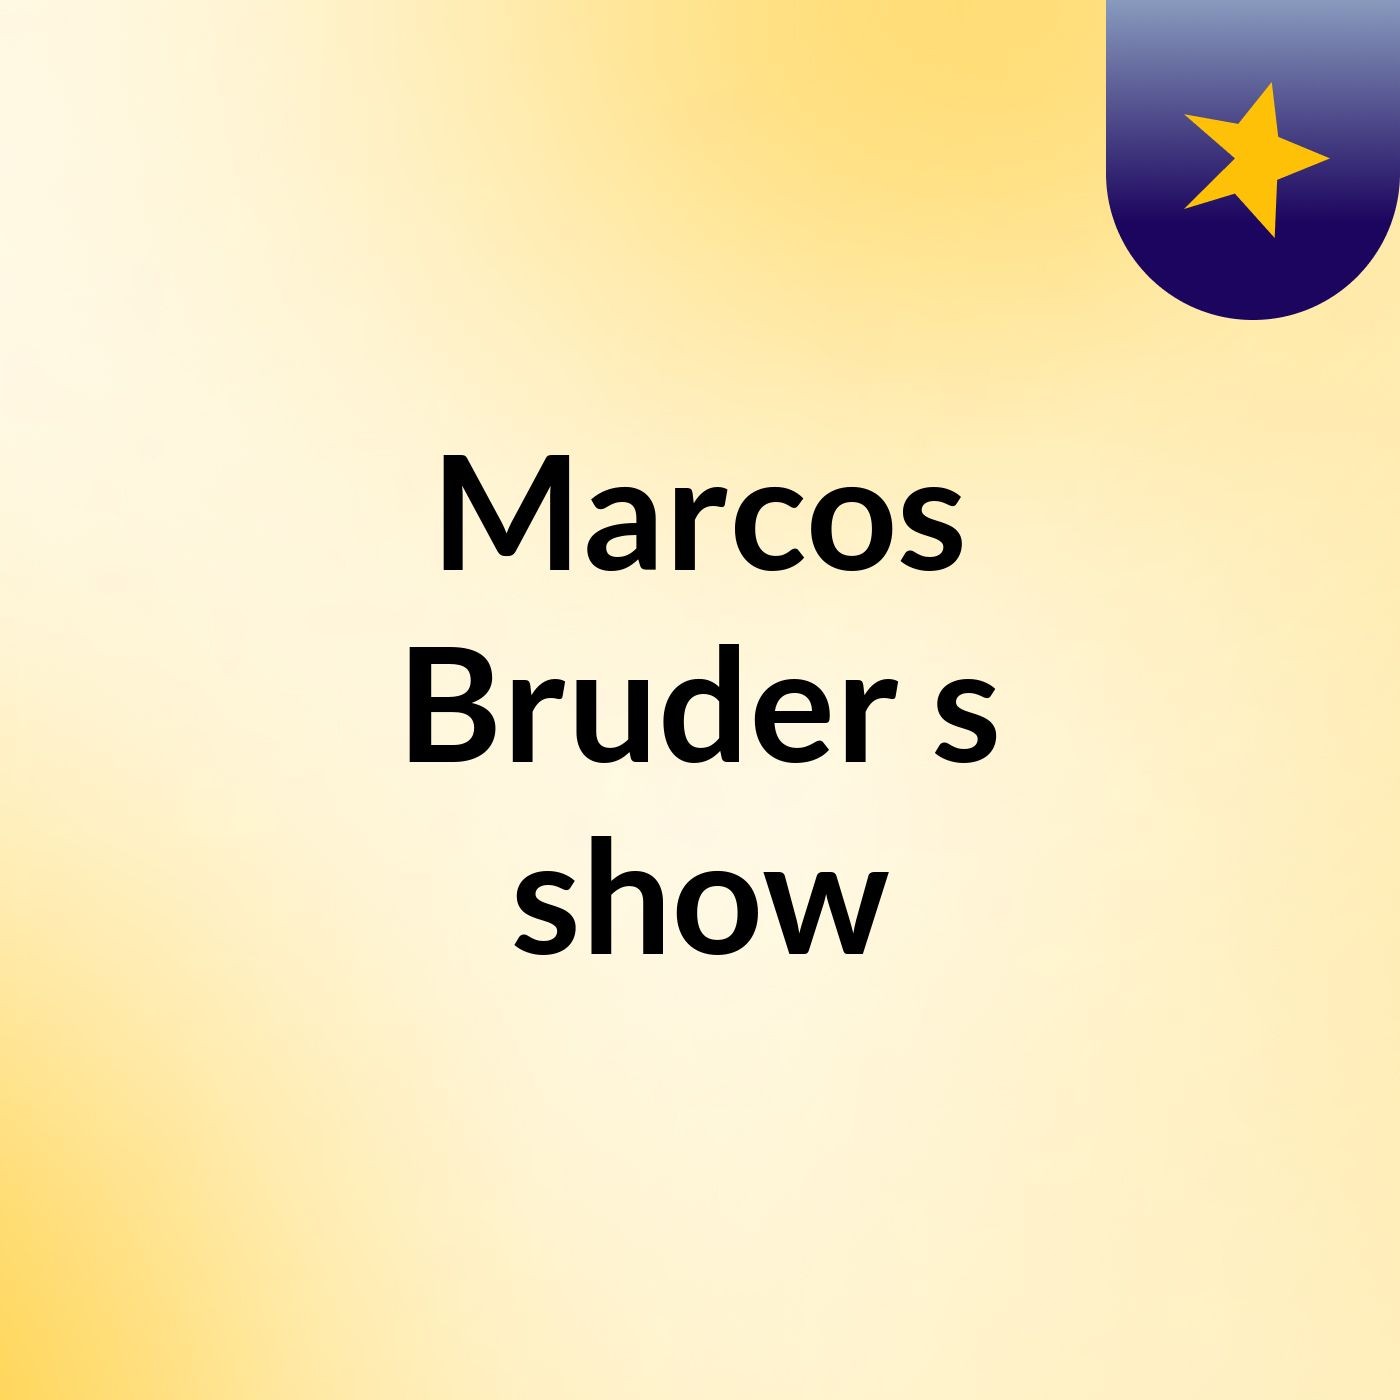 Marcos Bruder's show